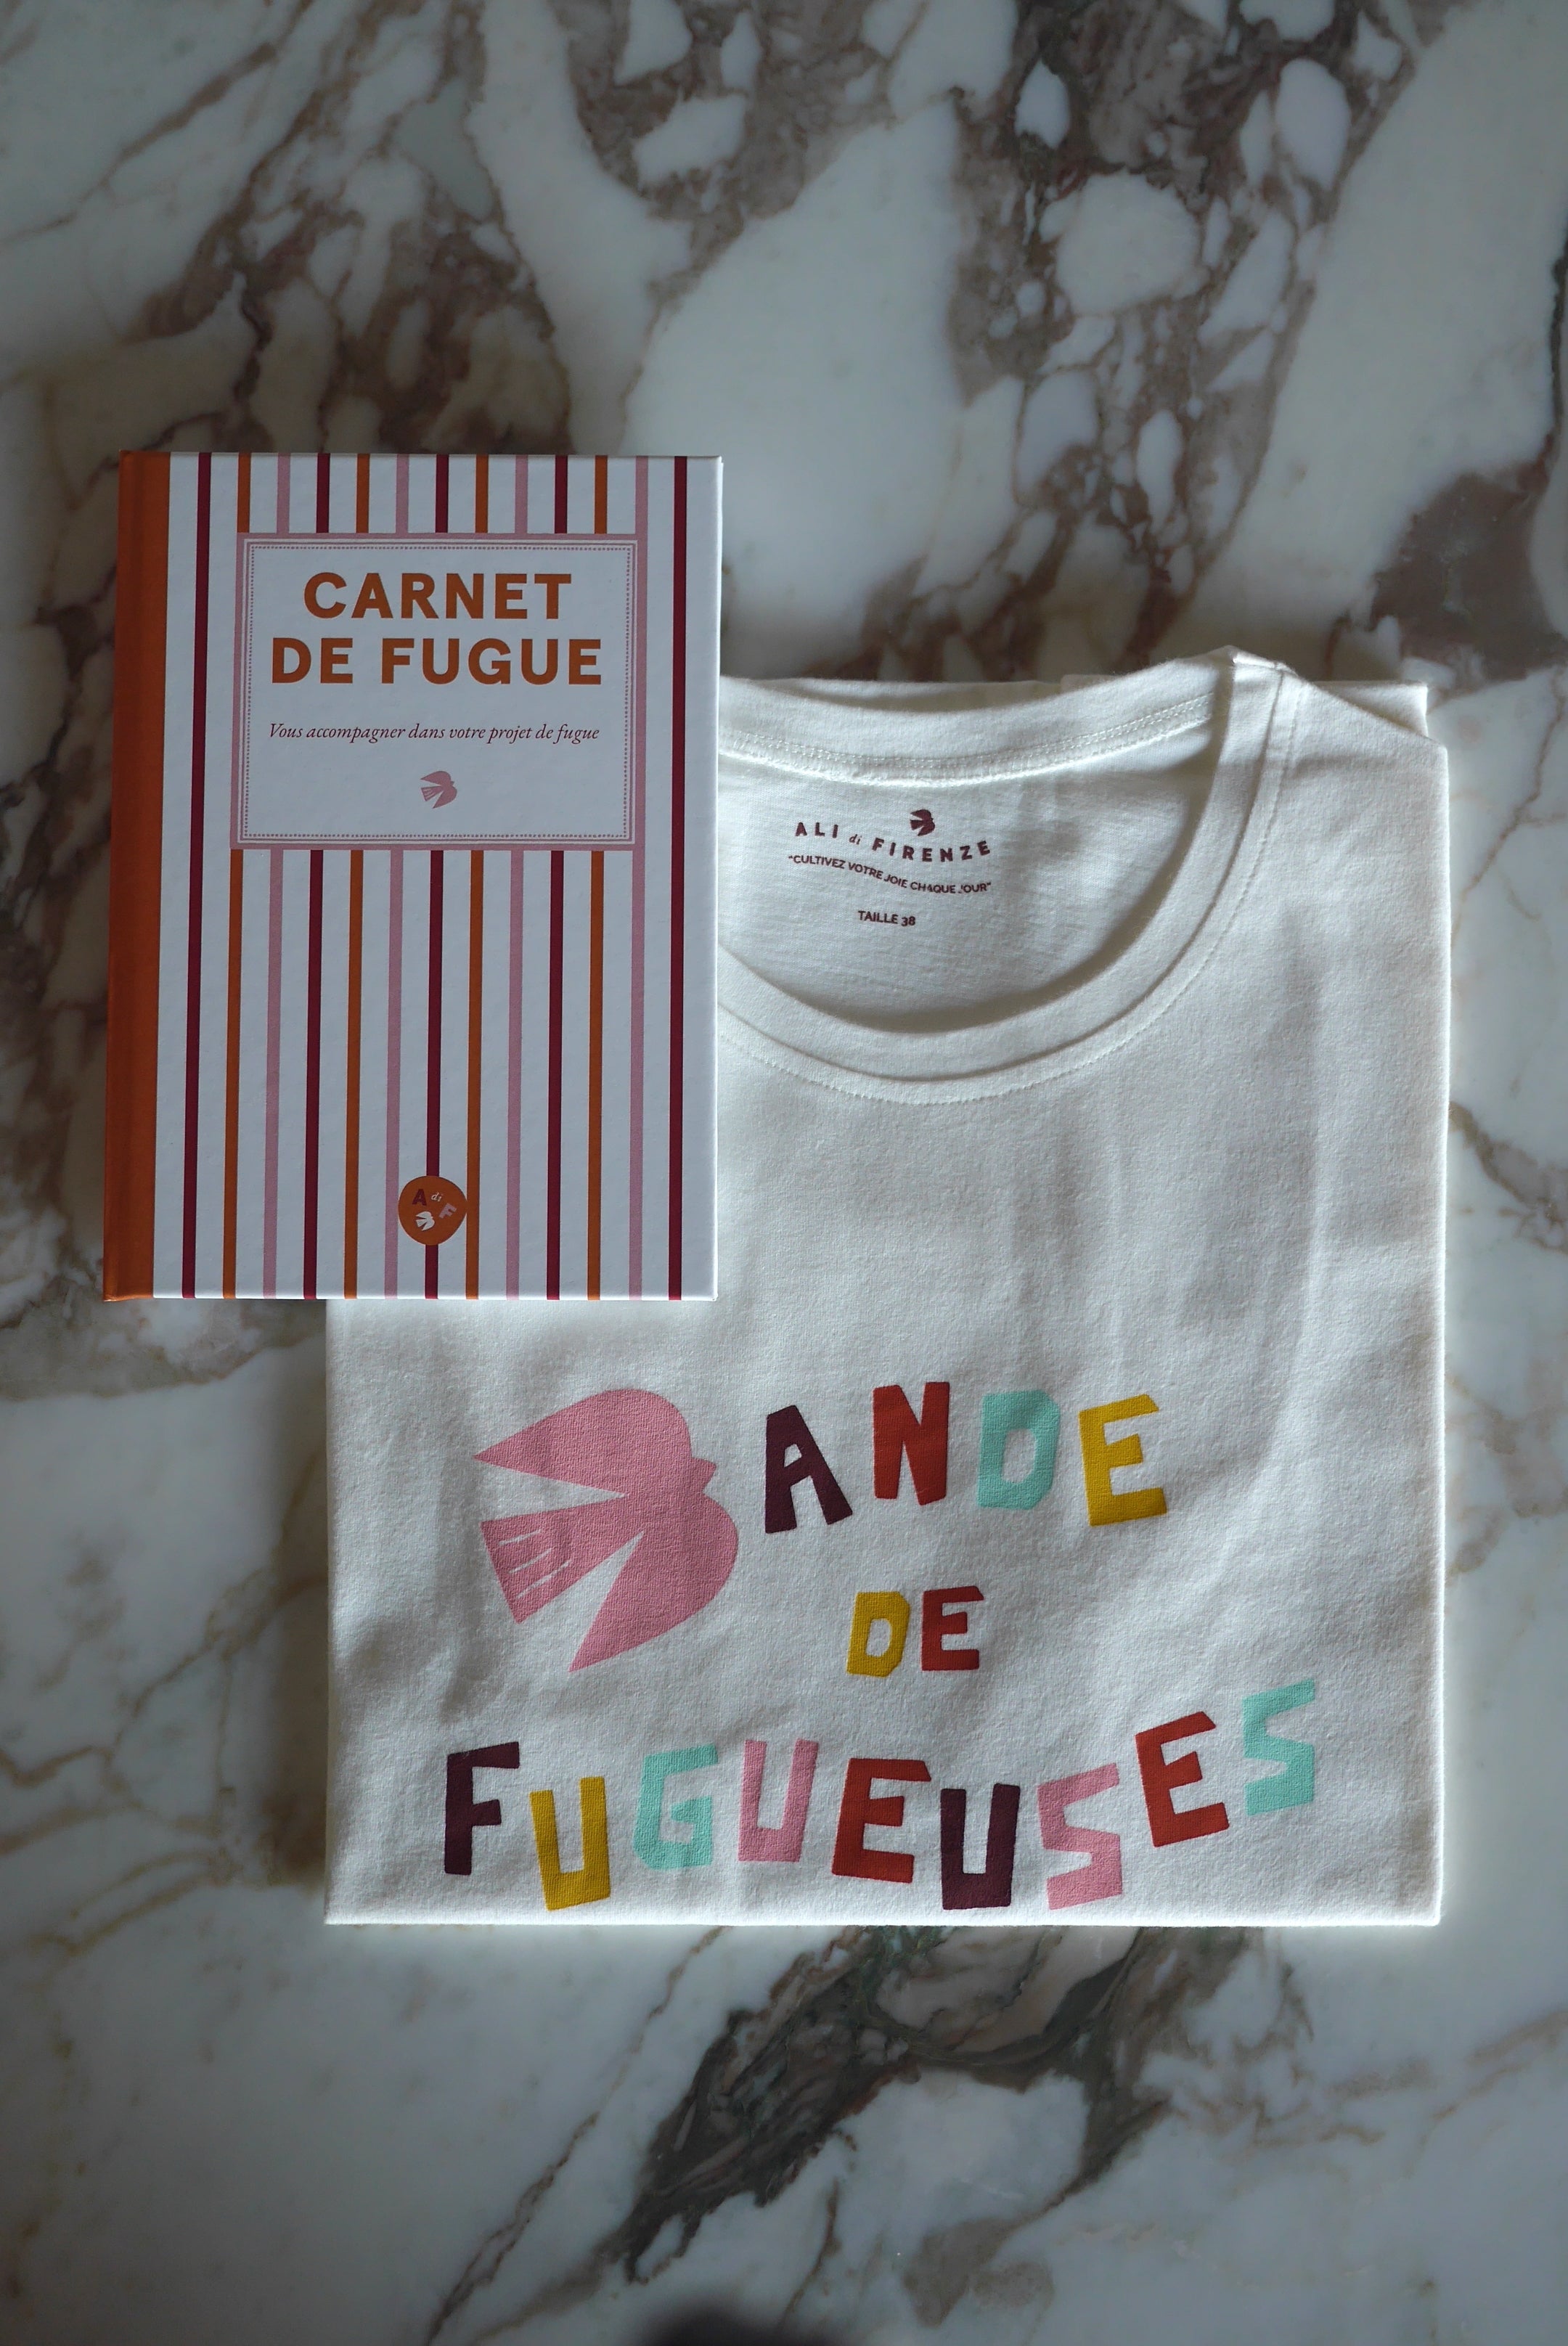 DUO Carnet de Fugue et tee-shirt « Bande de fugueuses »